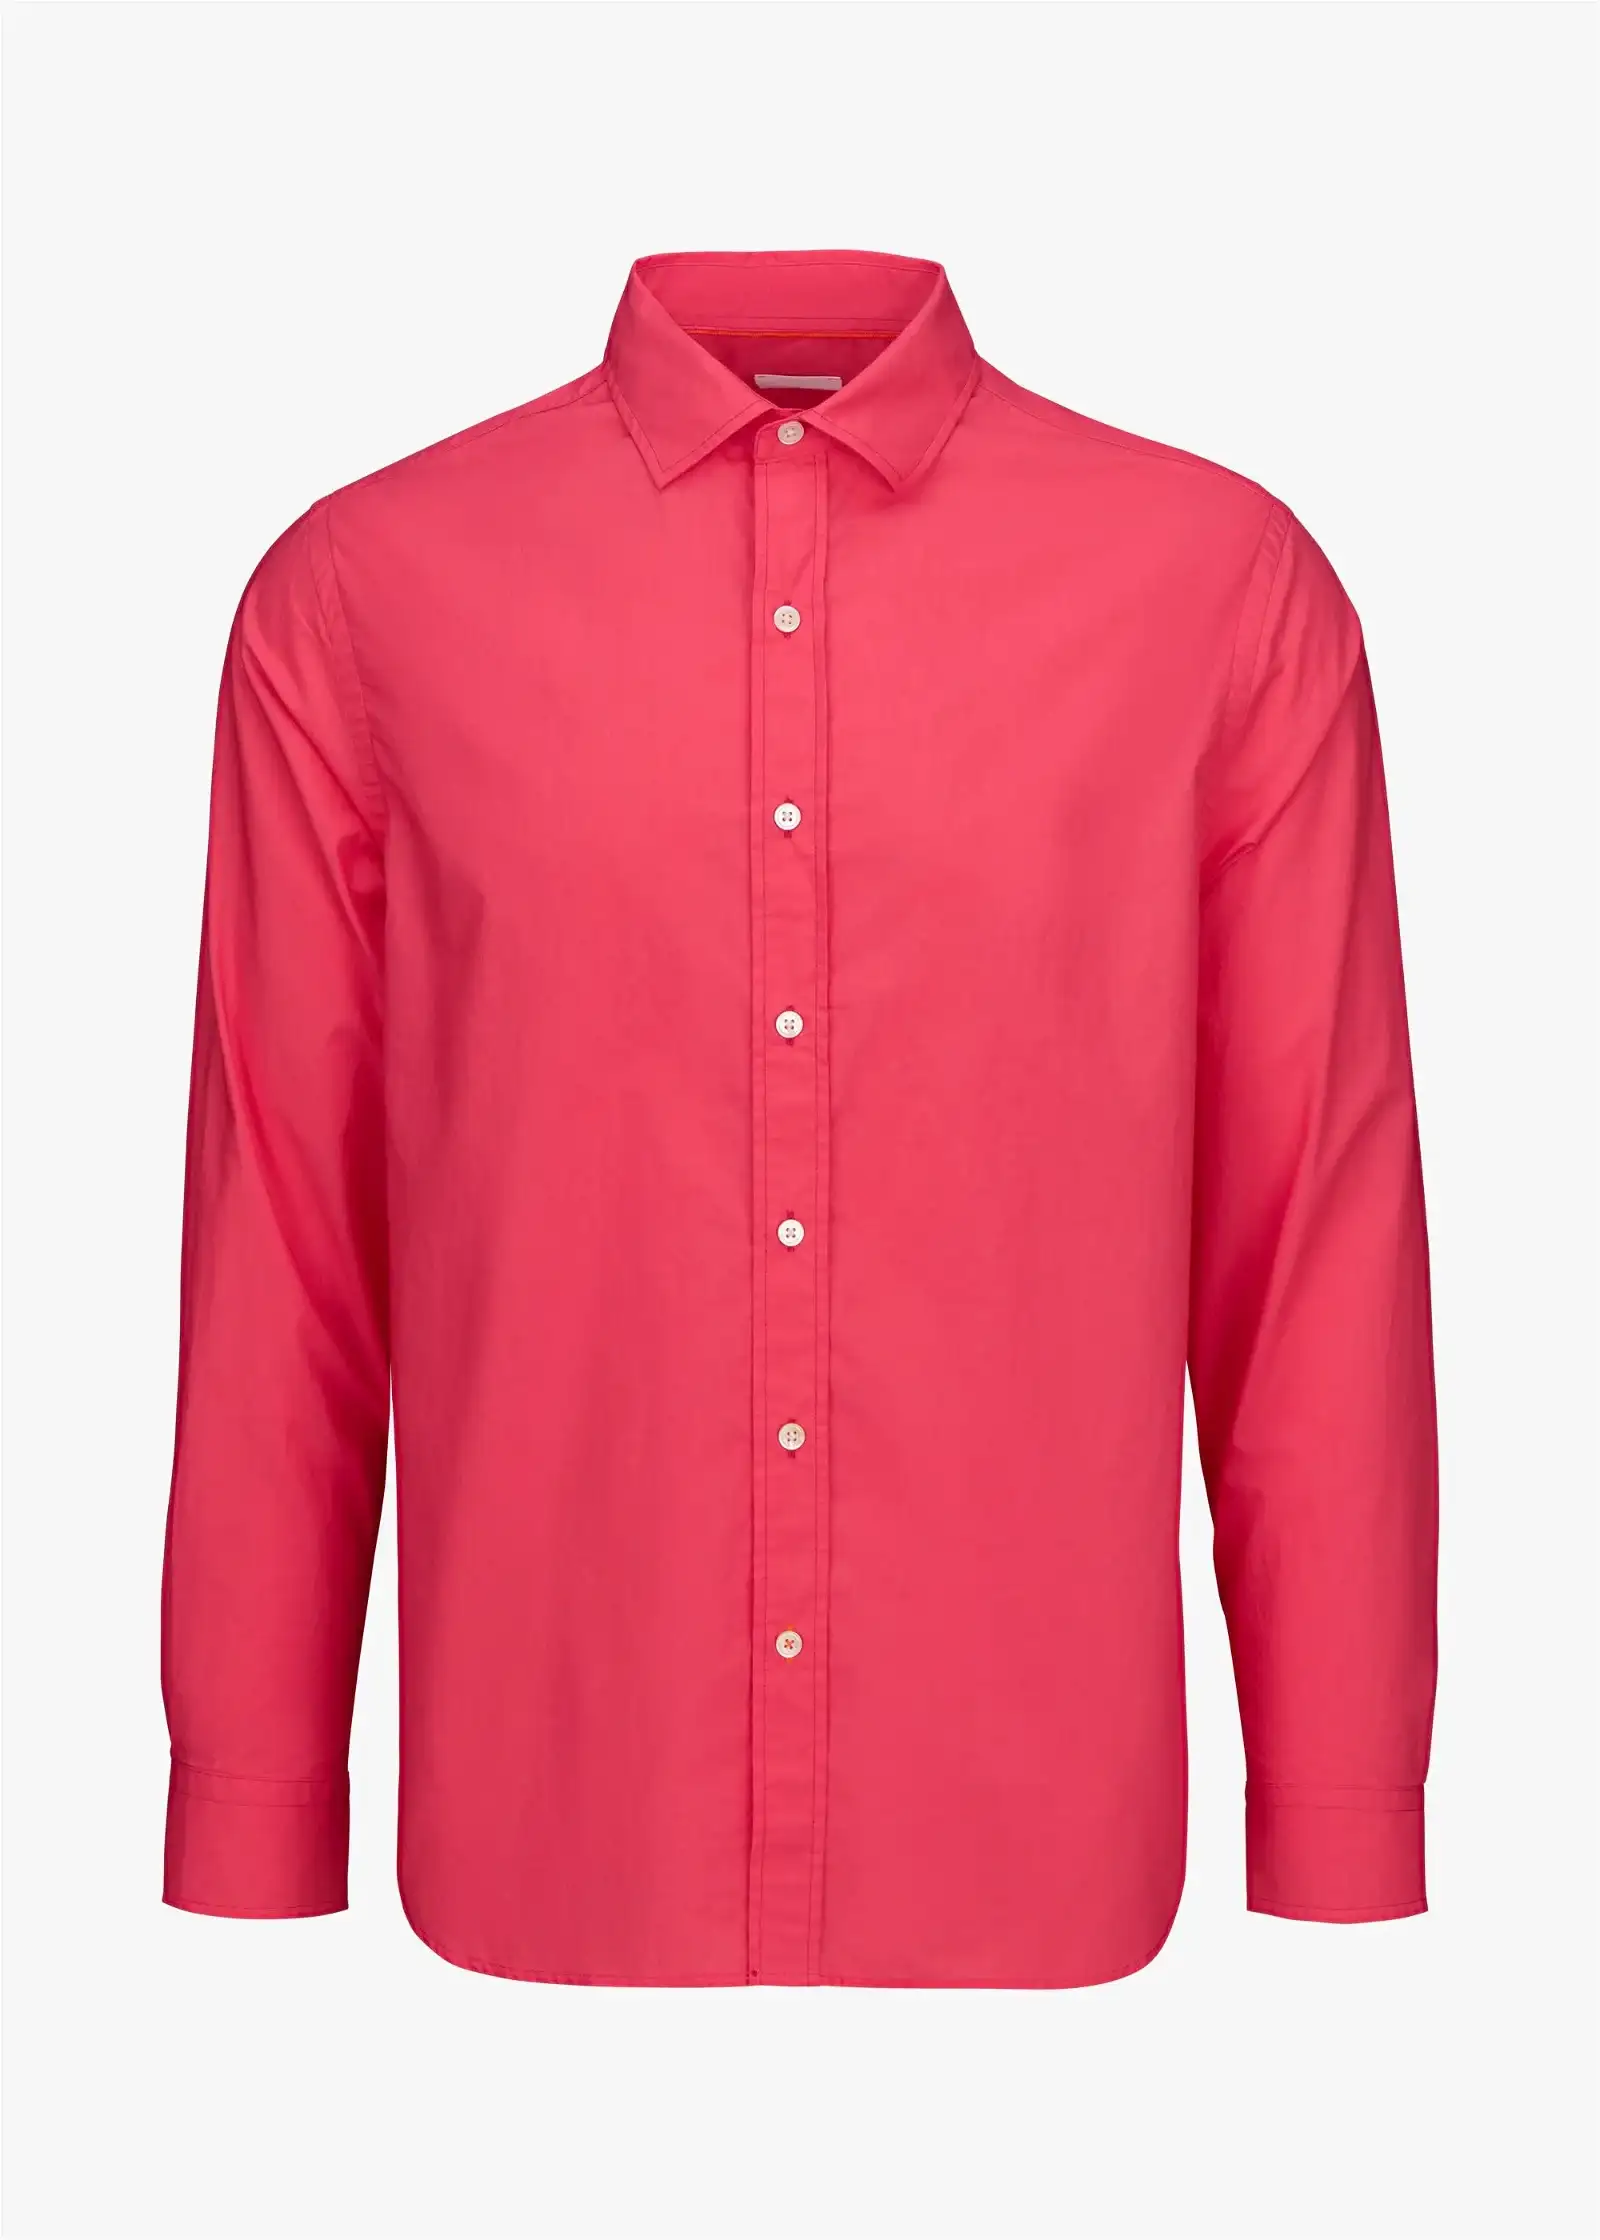 Image of Malfa Garment Dye Shirt